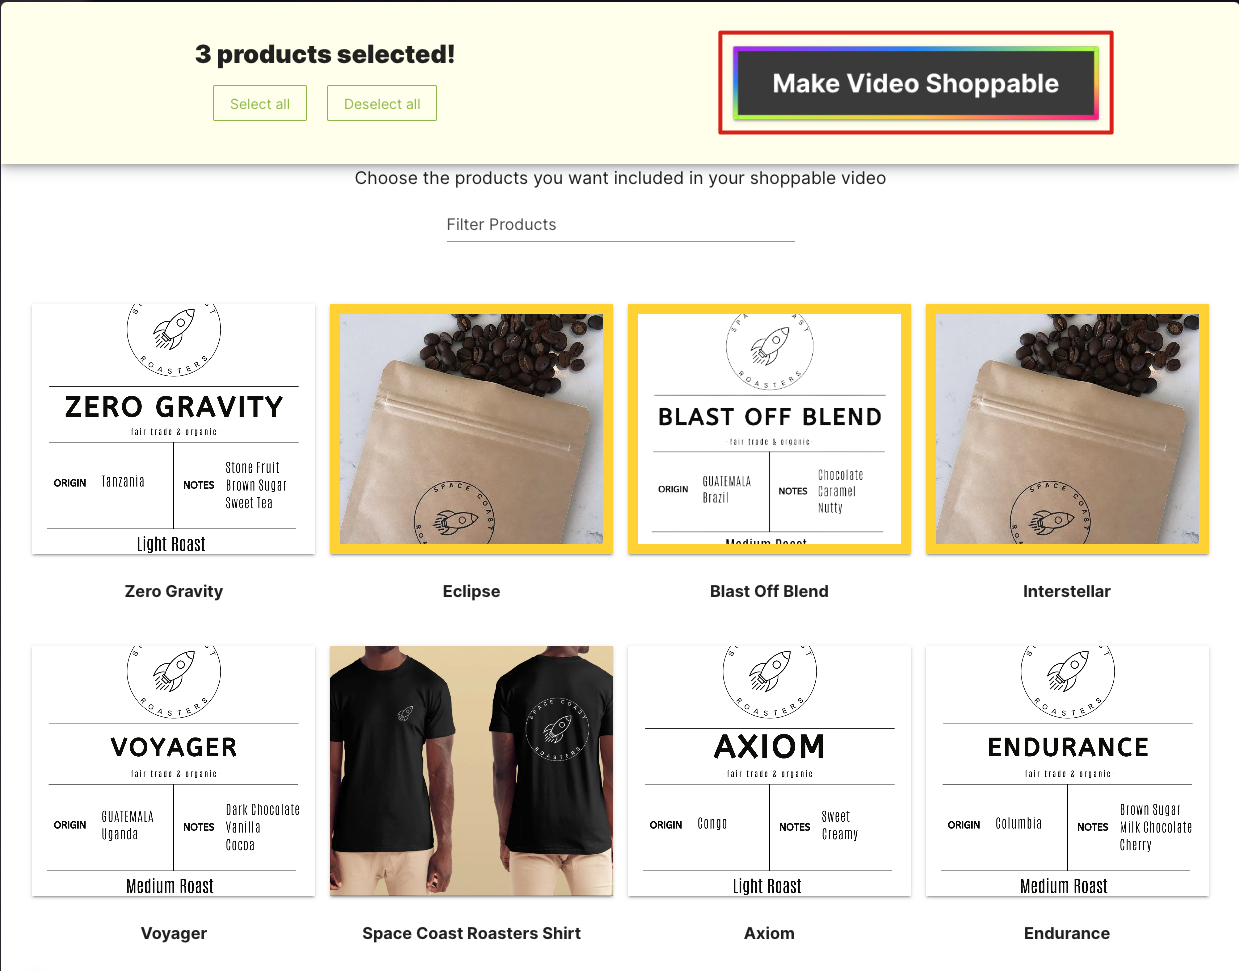 Make Video Shoppable